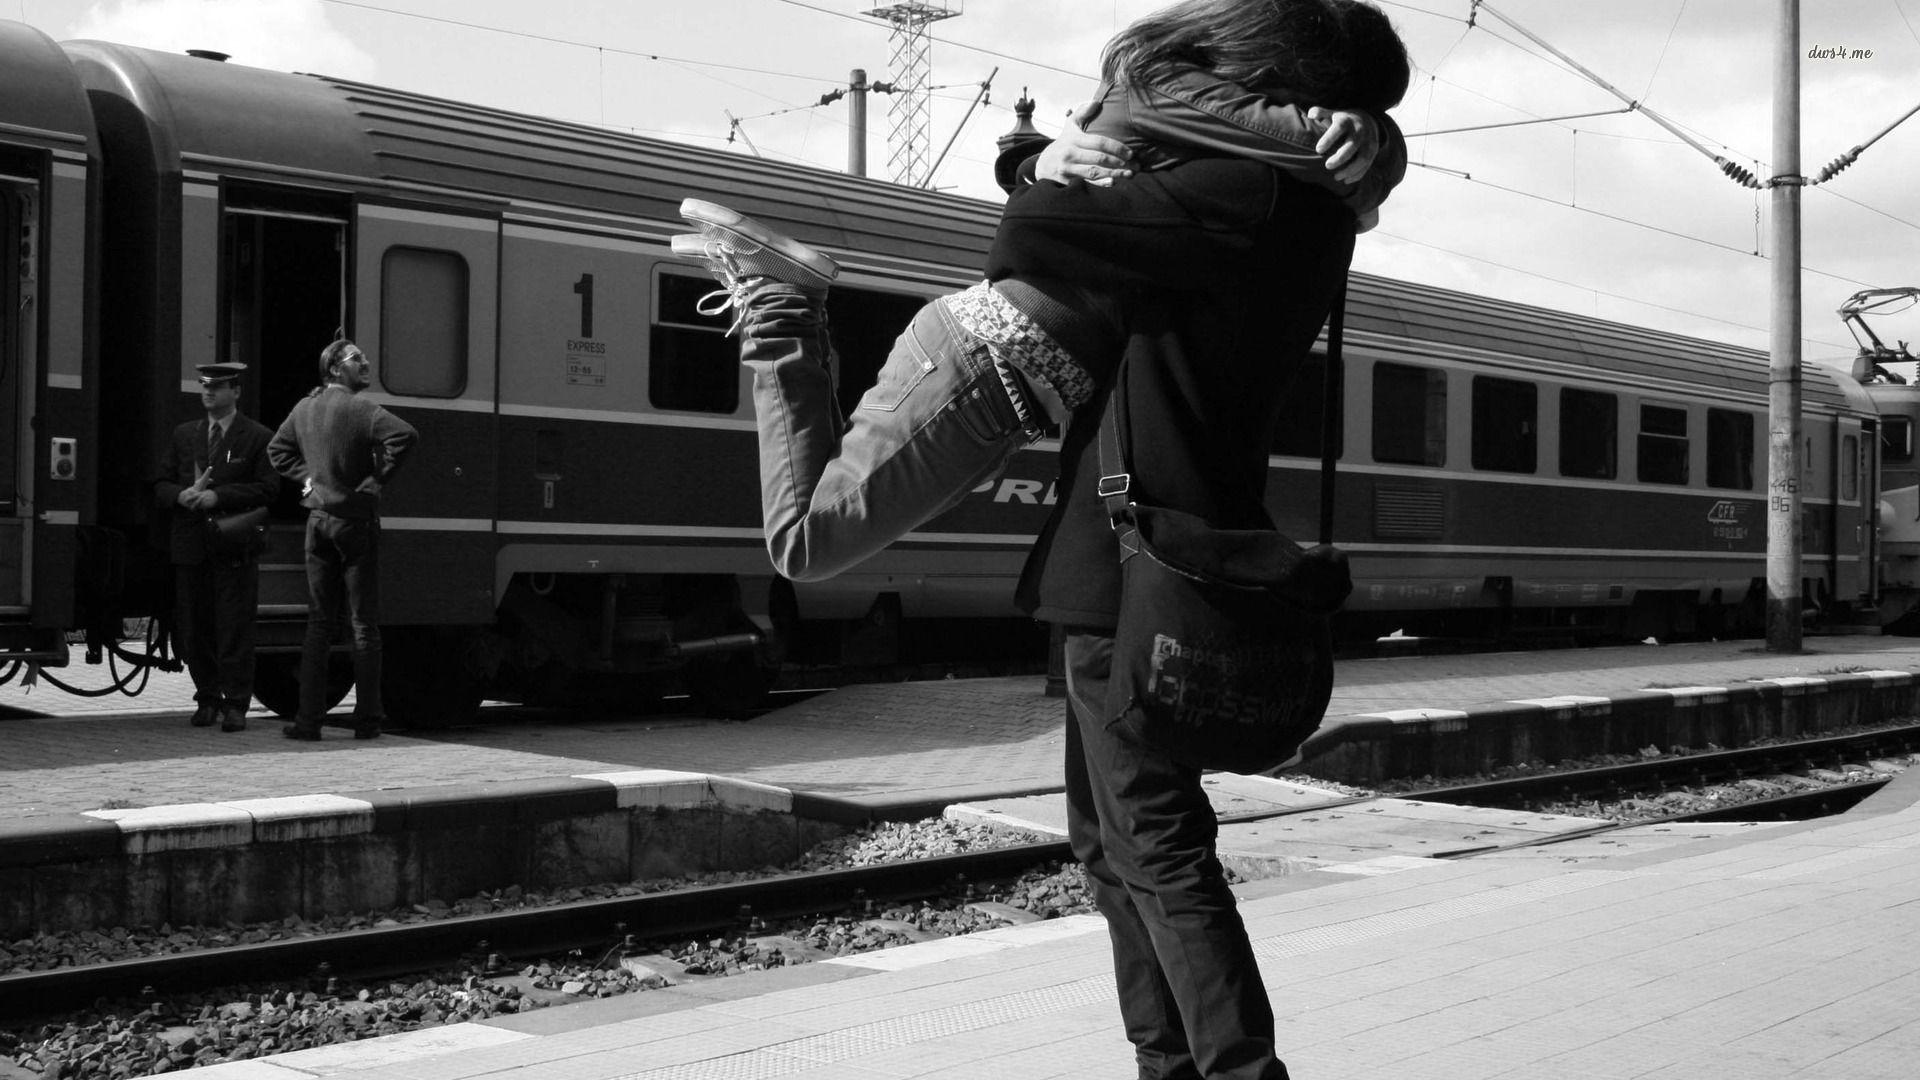 Hug in the train station wallpaper. Wallpaper Wide HD